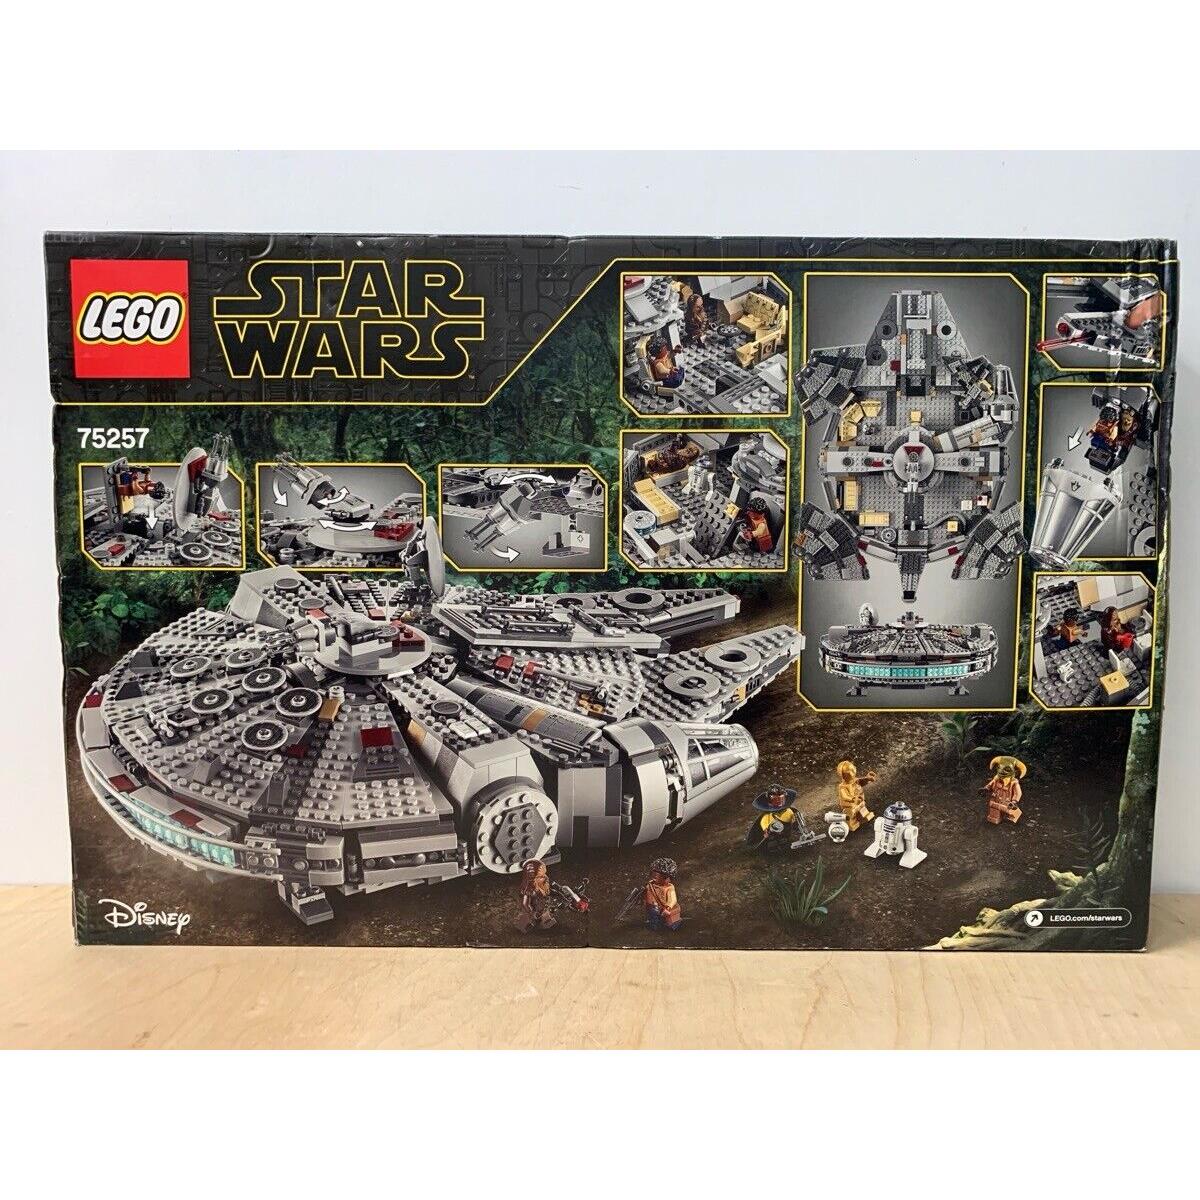 Lego Star Wars: Milennium Falcon - 75257 - 1351pcs - 9+ E10034876